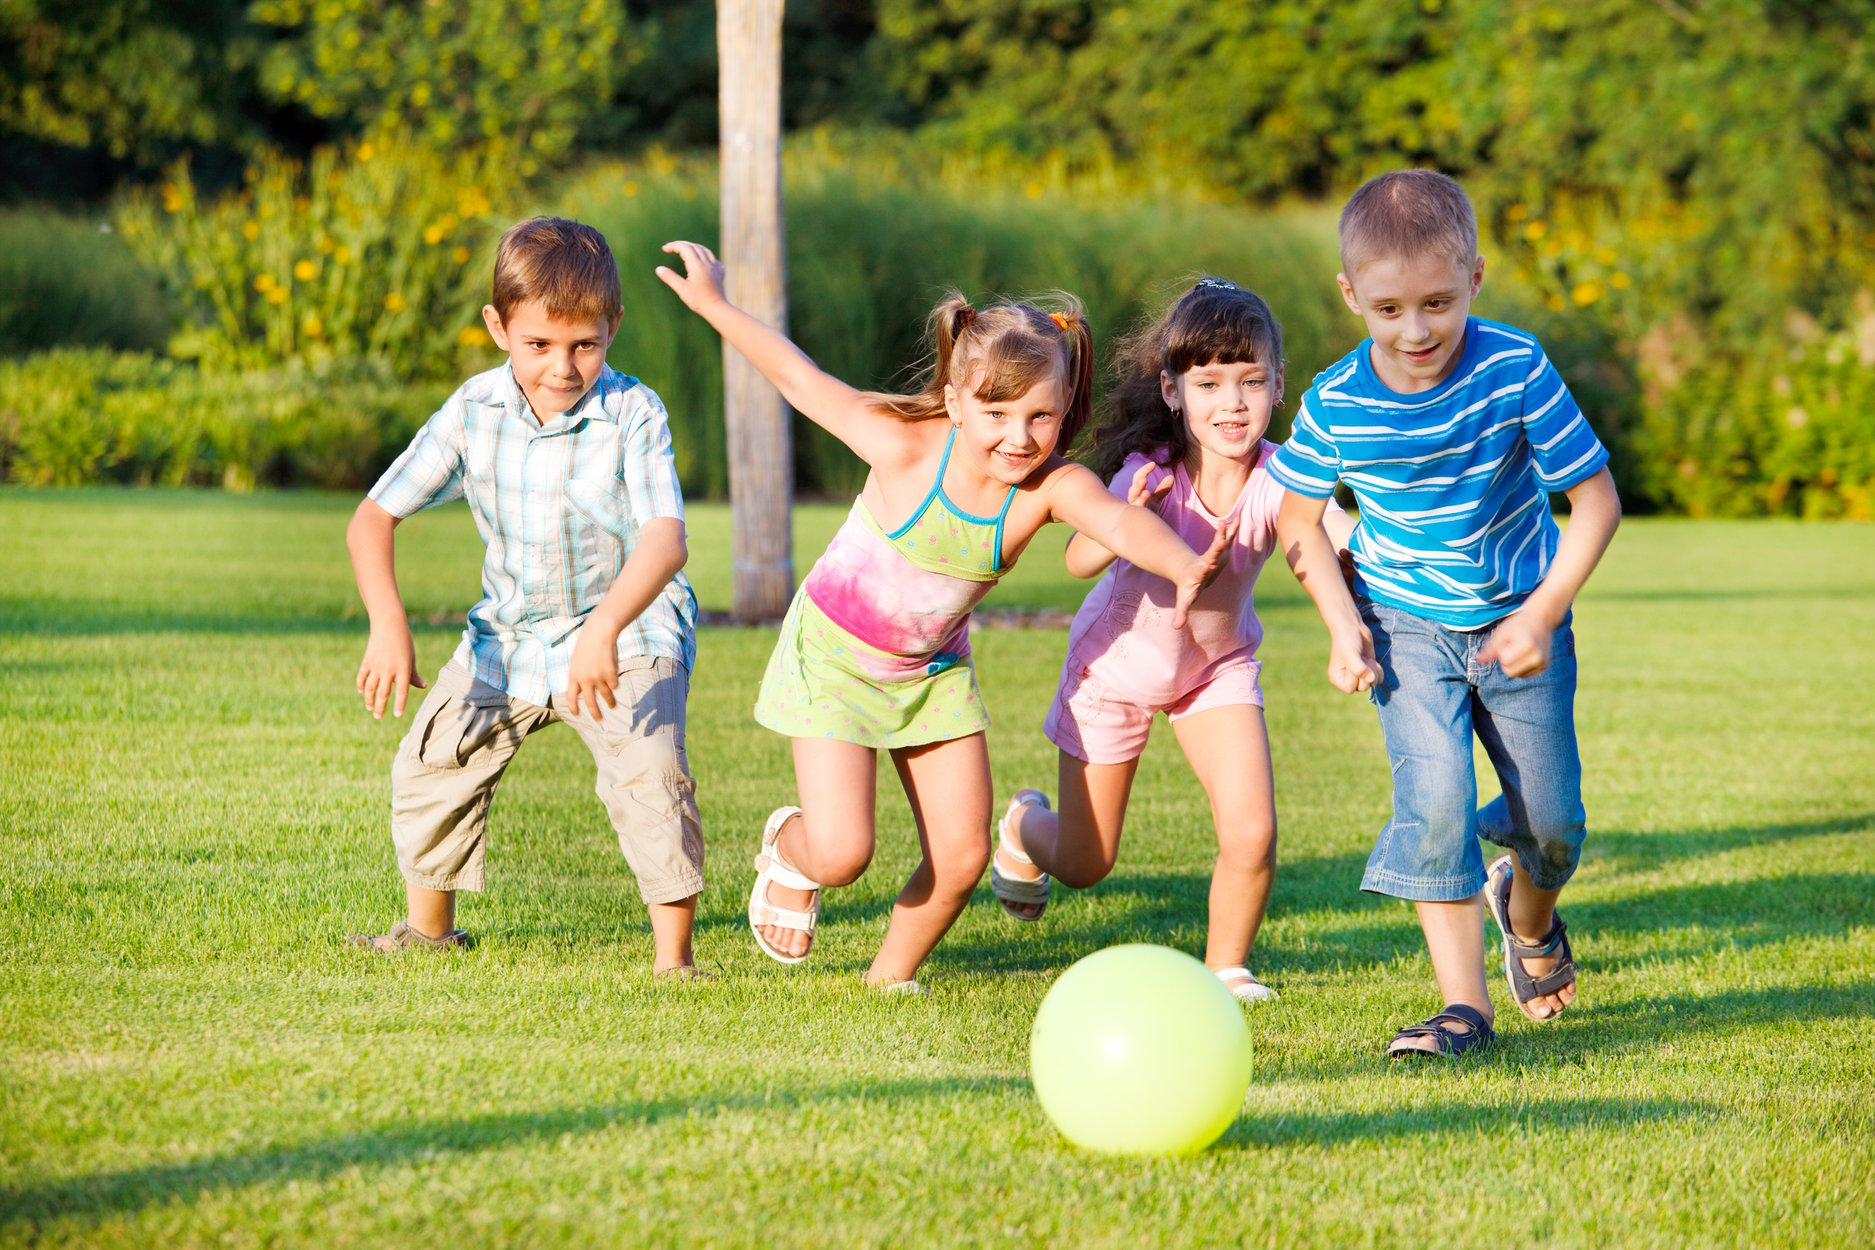 Physical Activity Benefits Children's Mental Health